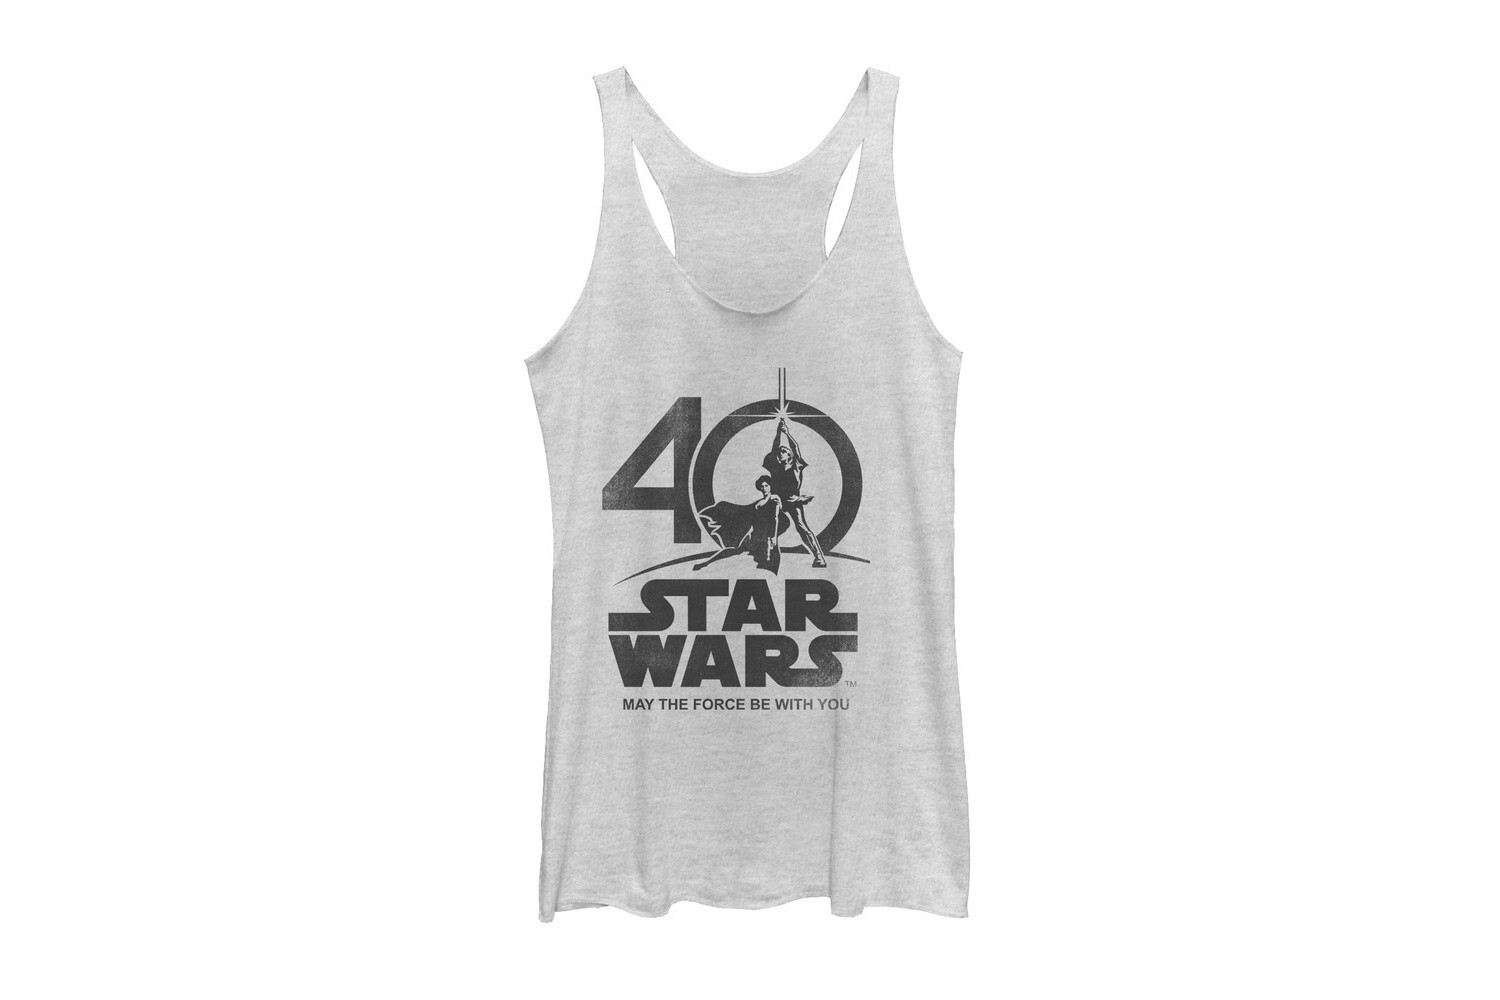 Women's Star Wars 40th Anniversary racerback tank top by Fifth Sun